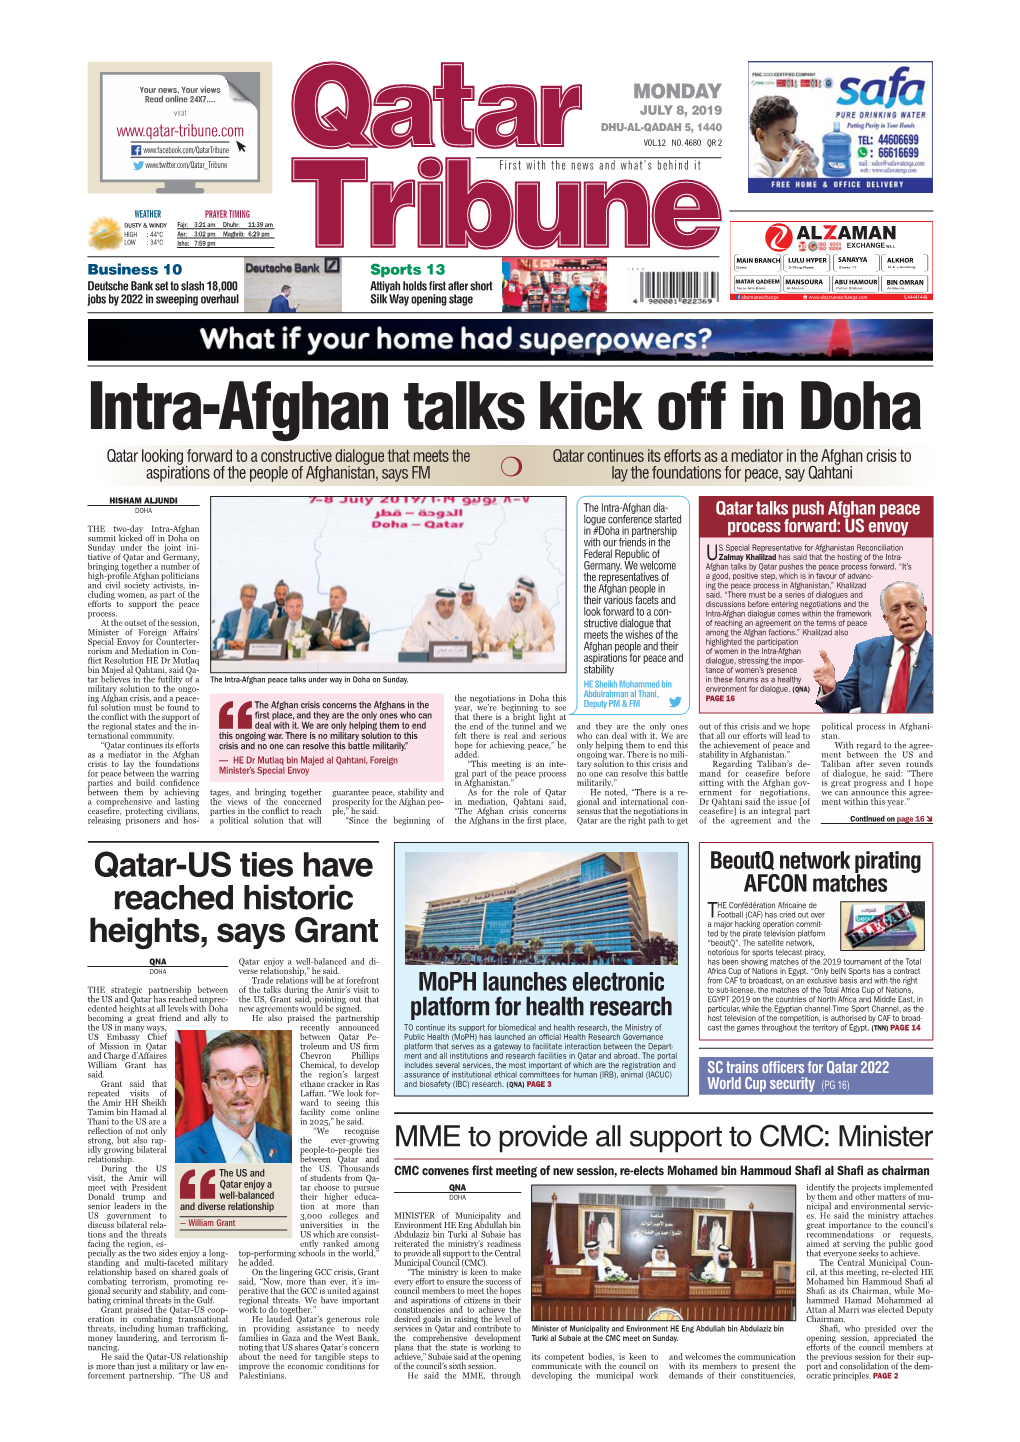 Intra-Afghan Talks Kick Off in Doha